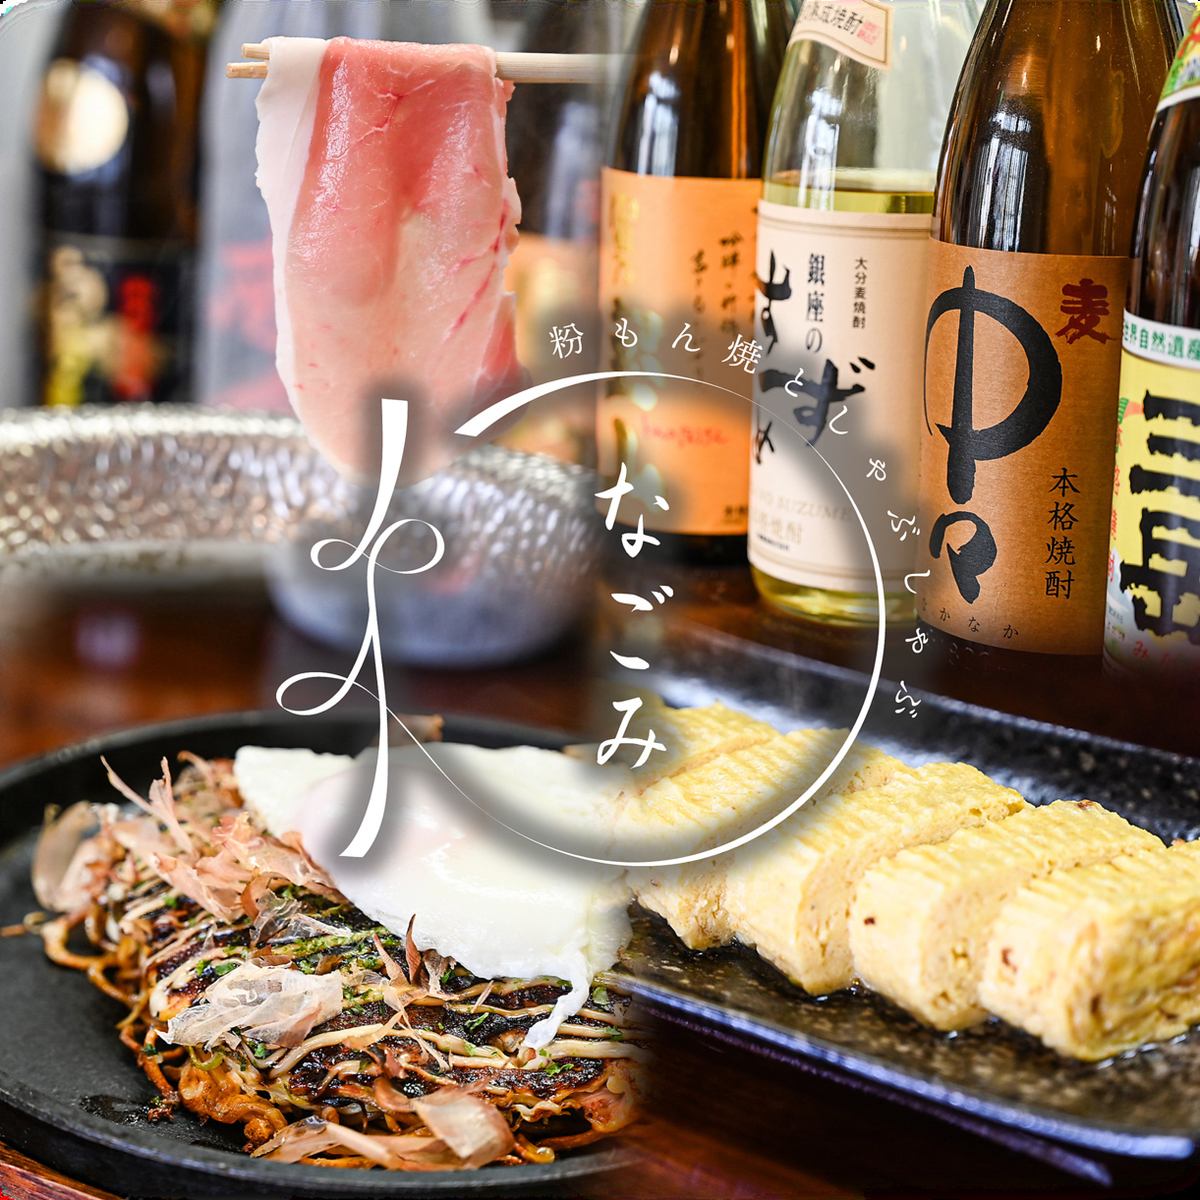 "Bono Pork Gifu" procured through our own route is served in shabu-shabu or teppanyaki.